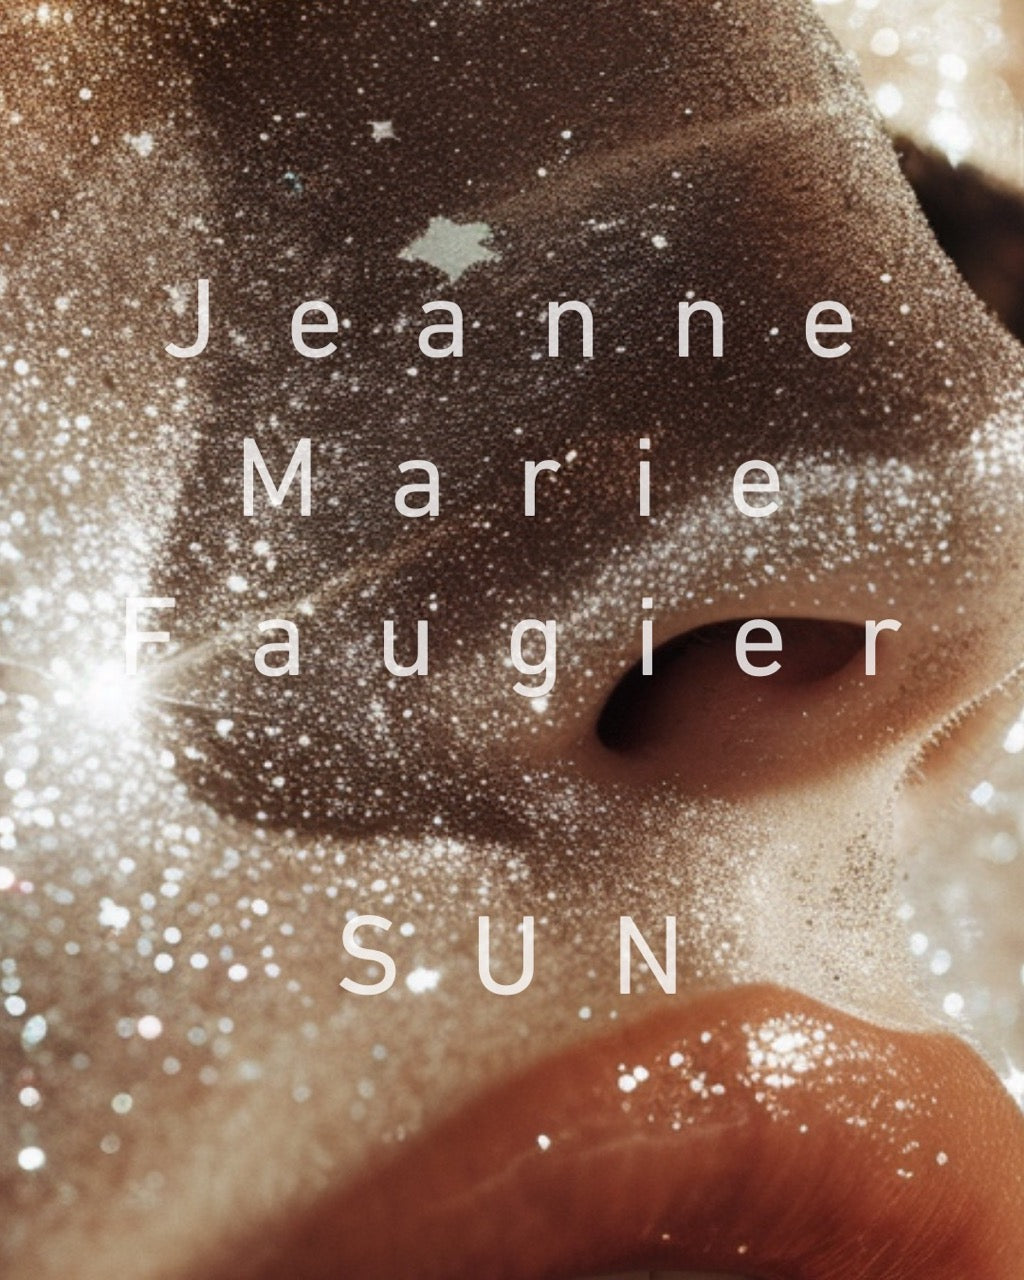 Jeanne Marie Faugier, perfumer behind 'Sun'